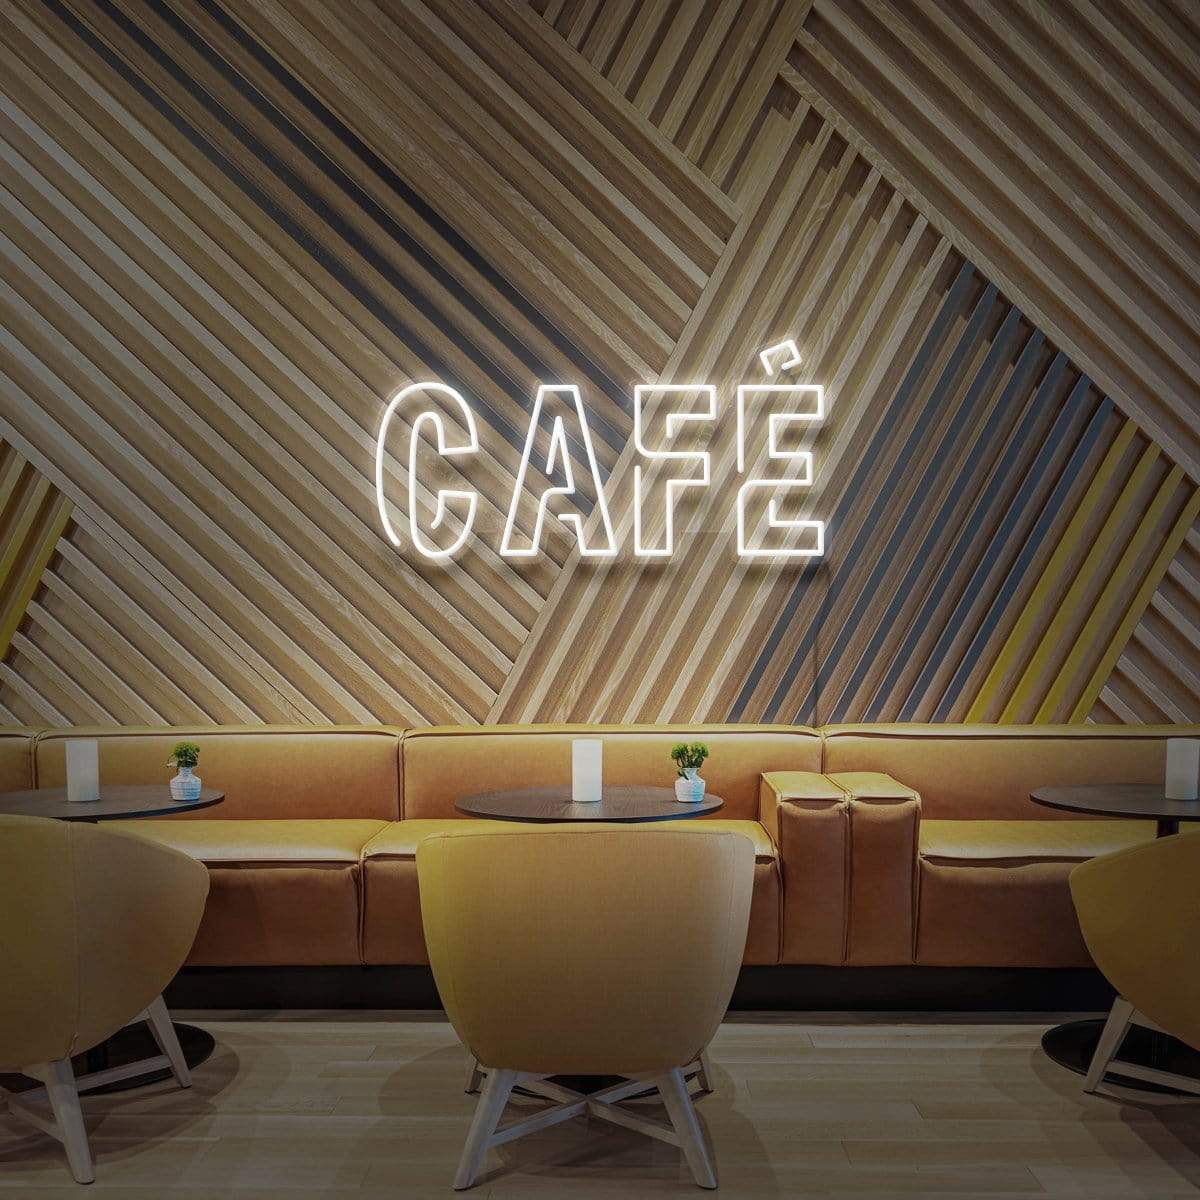 "Café" Neon Sign for Cafés 60cm (2ft) / White / LED Neon by Neon Icons